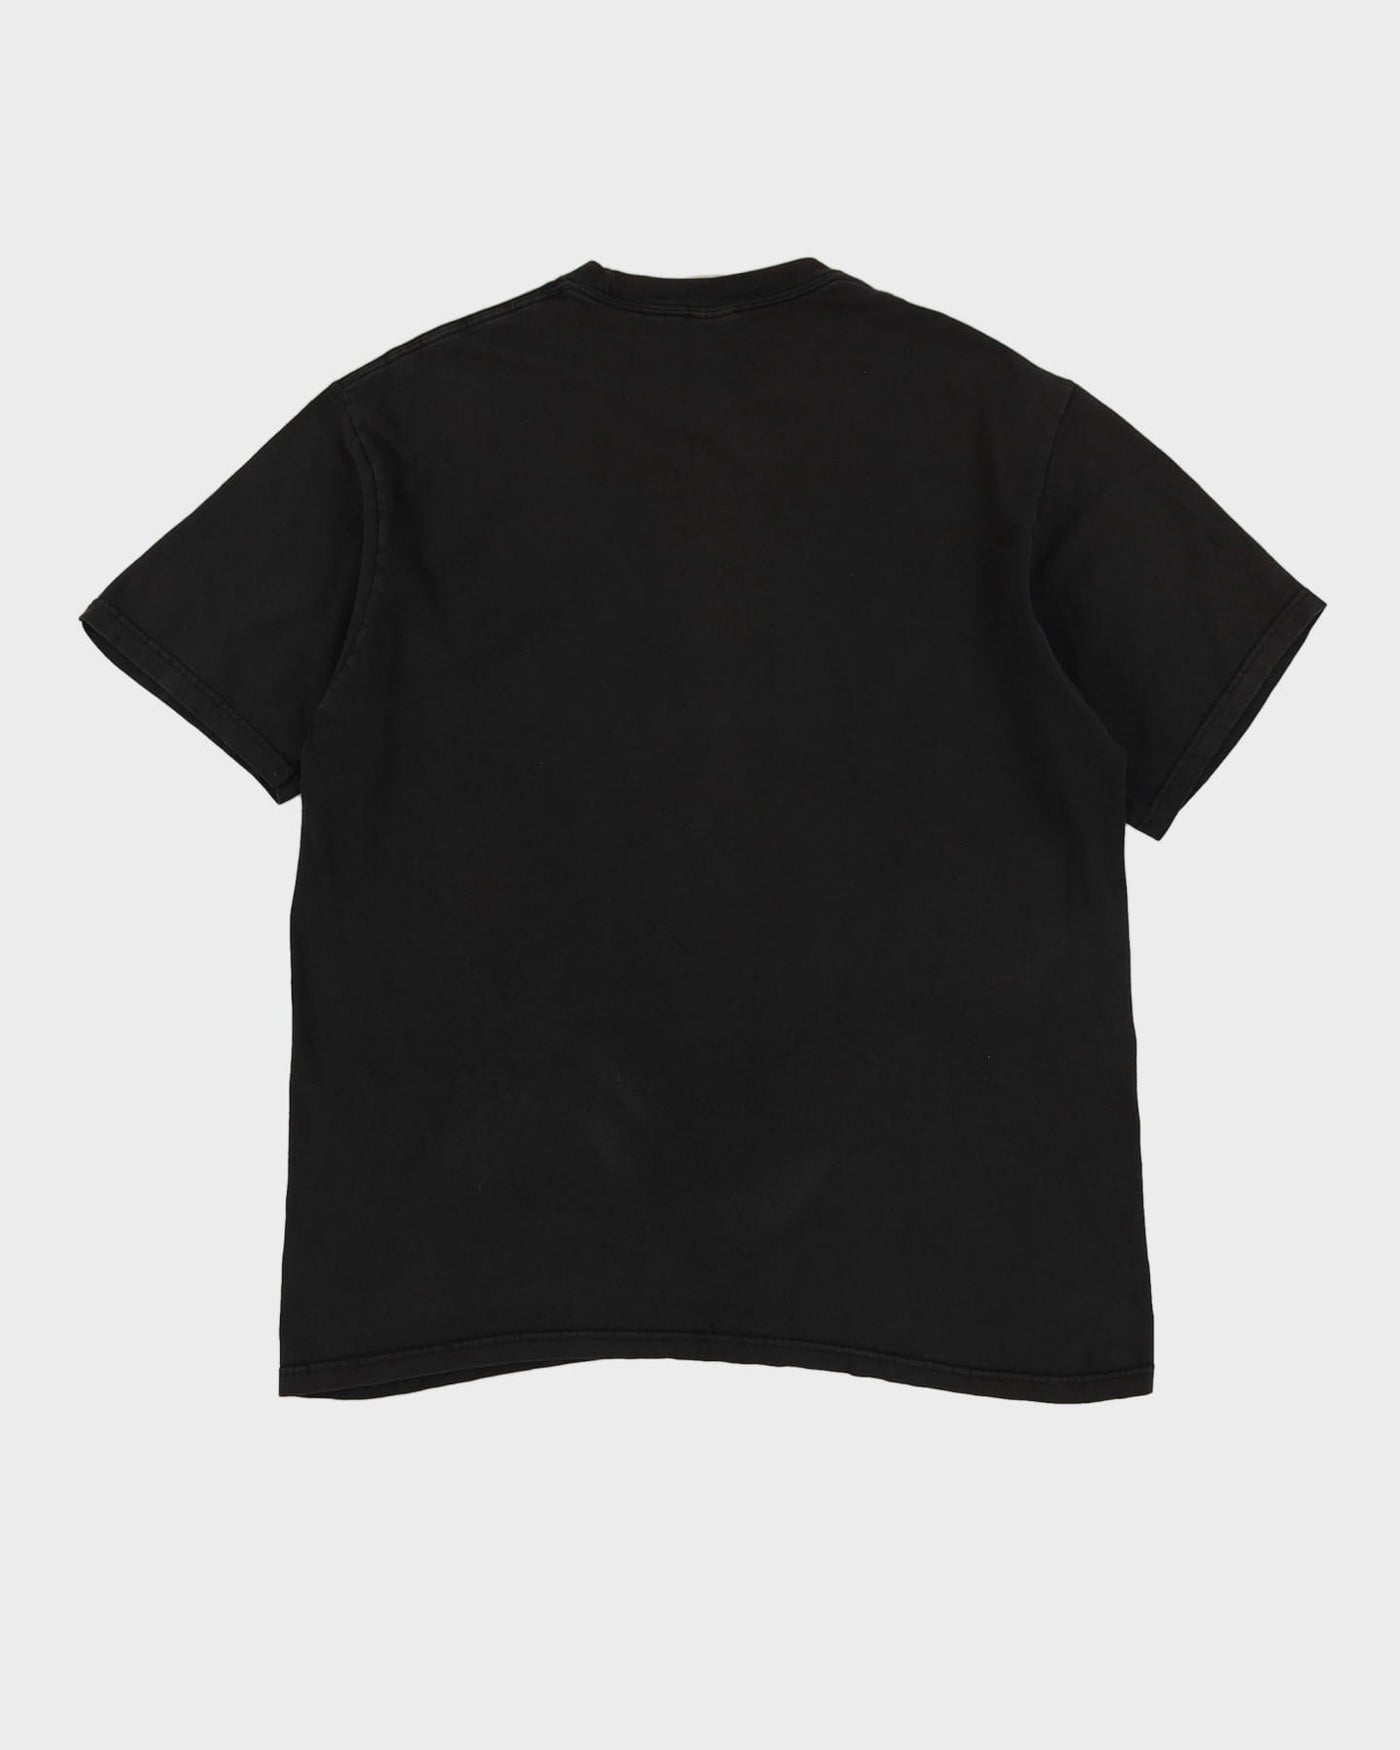 Supreme Riders Black Graphic T-Shirt - L